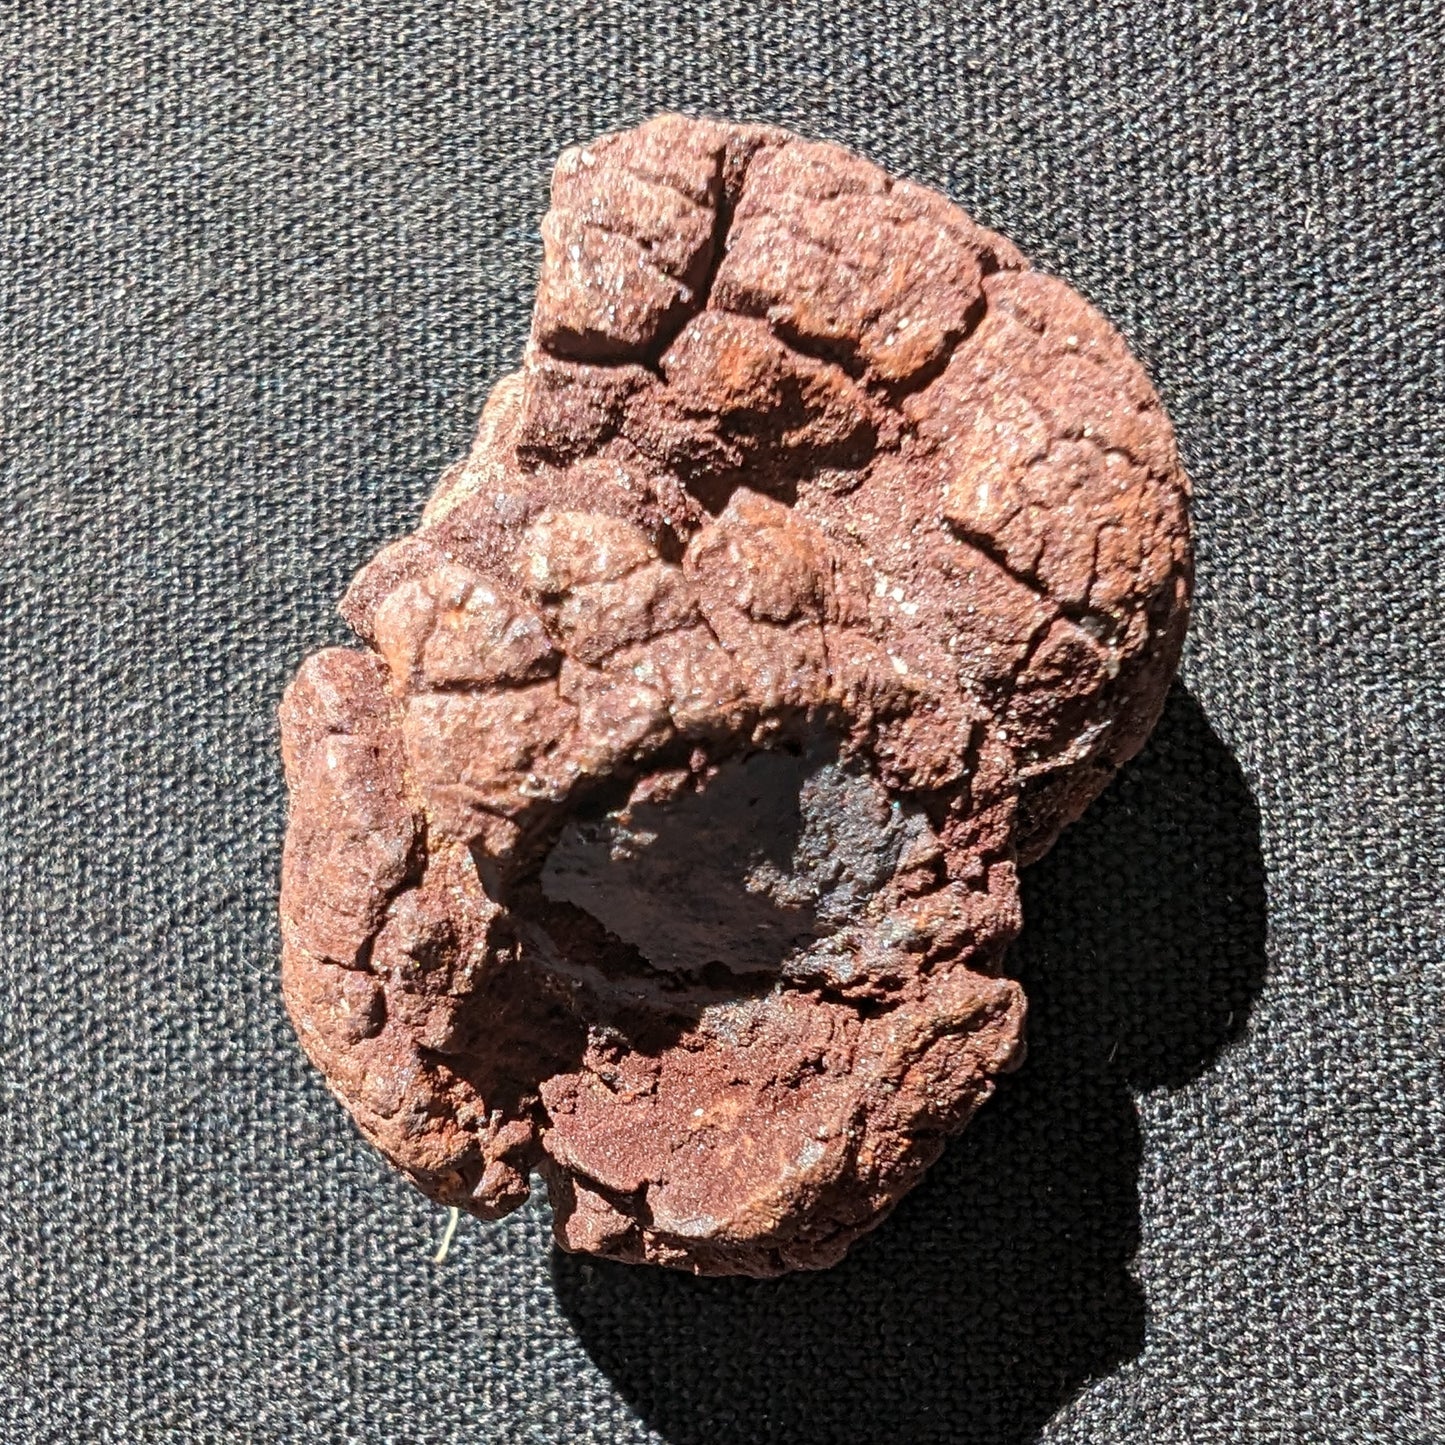 Coprolite fossil dinosaur poo 31g